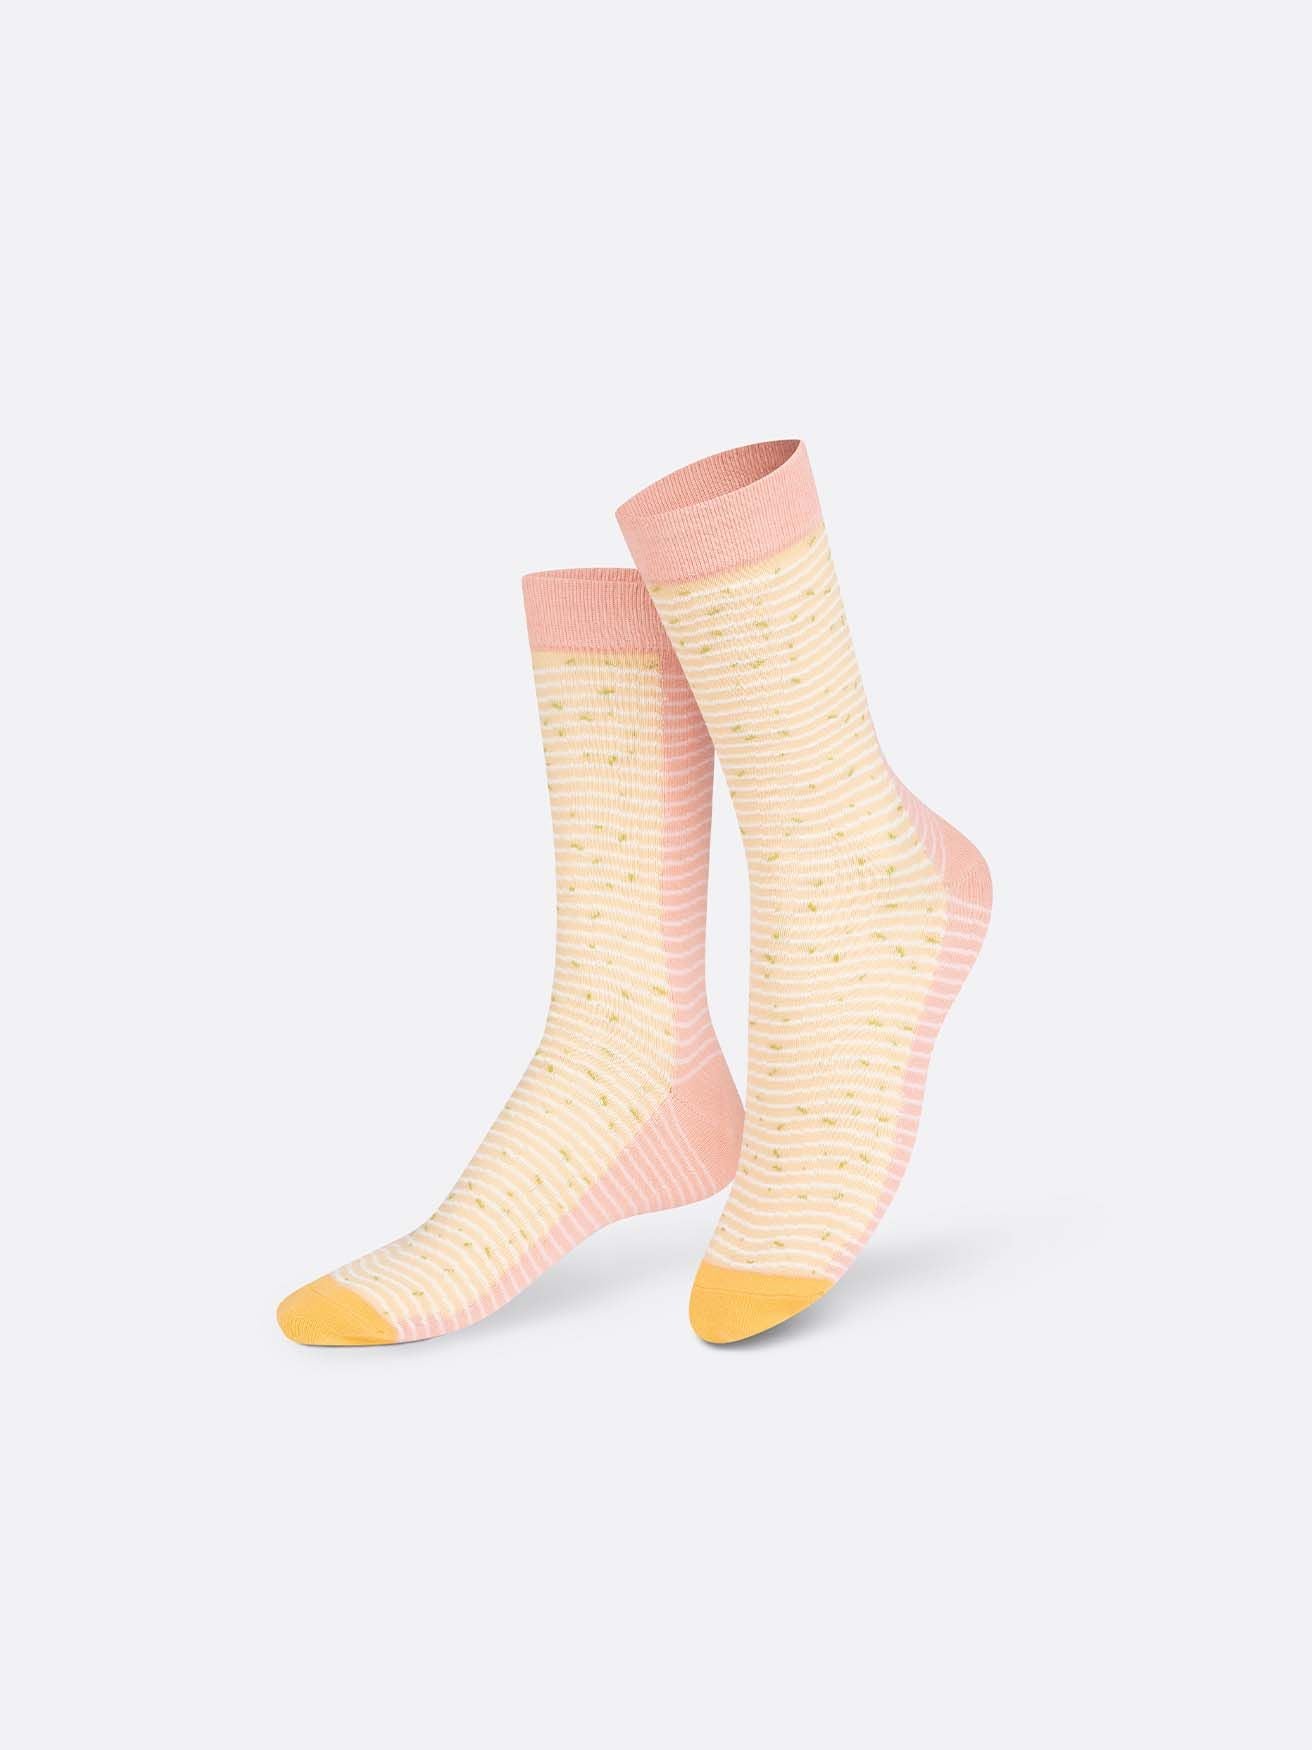 Miso Ramen Socks